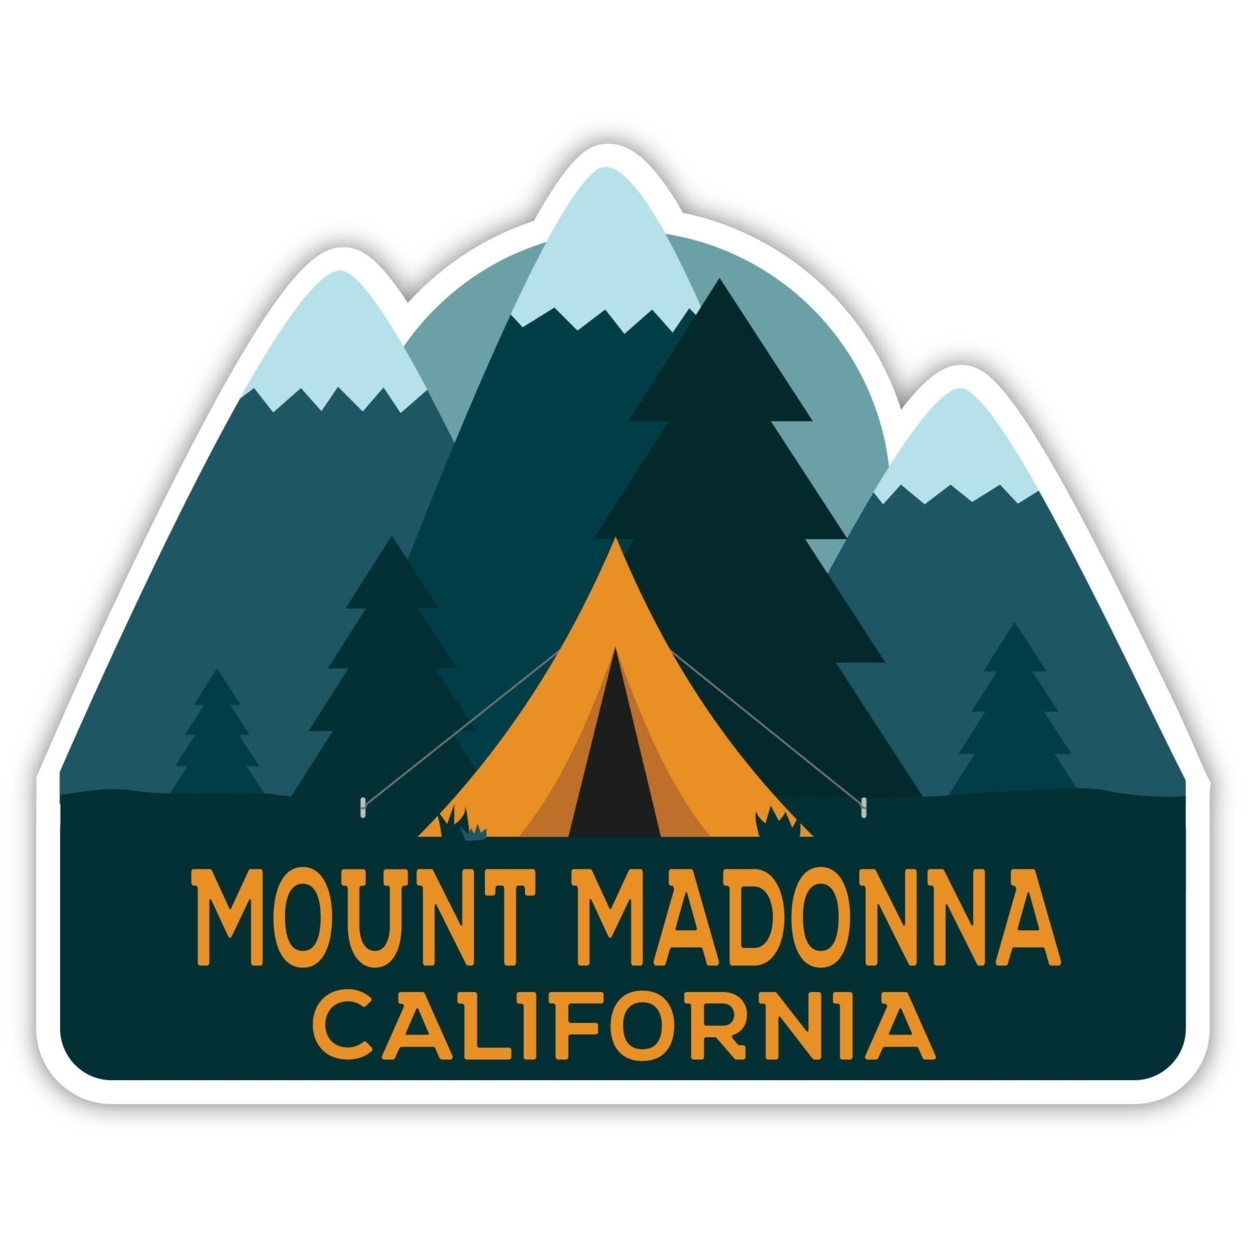 Mount Madonna California Souvenir Decorative Stickers (Choose Theme And Size) - Single Unit, 2-Inch, Camp Life